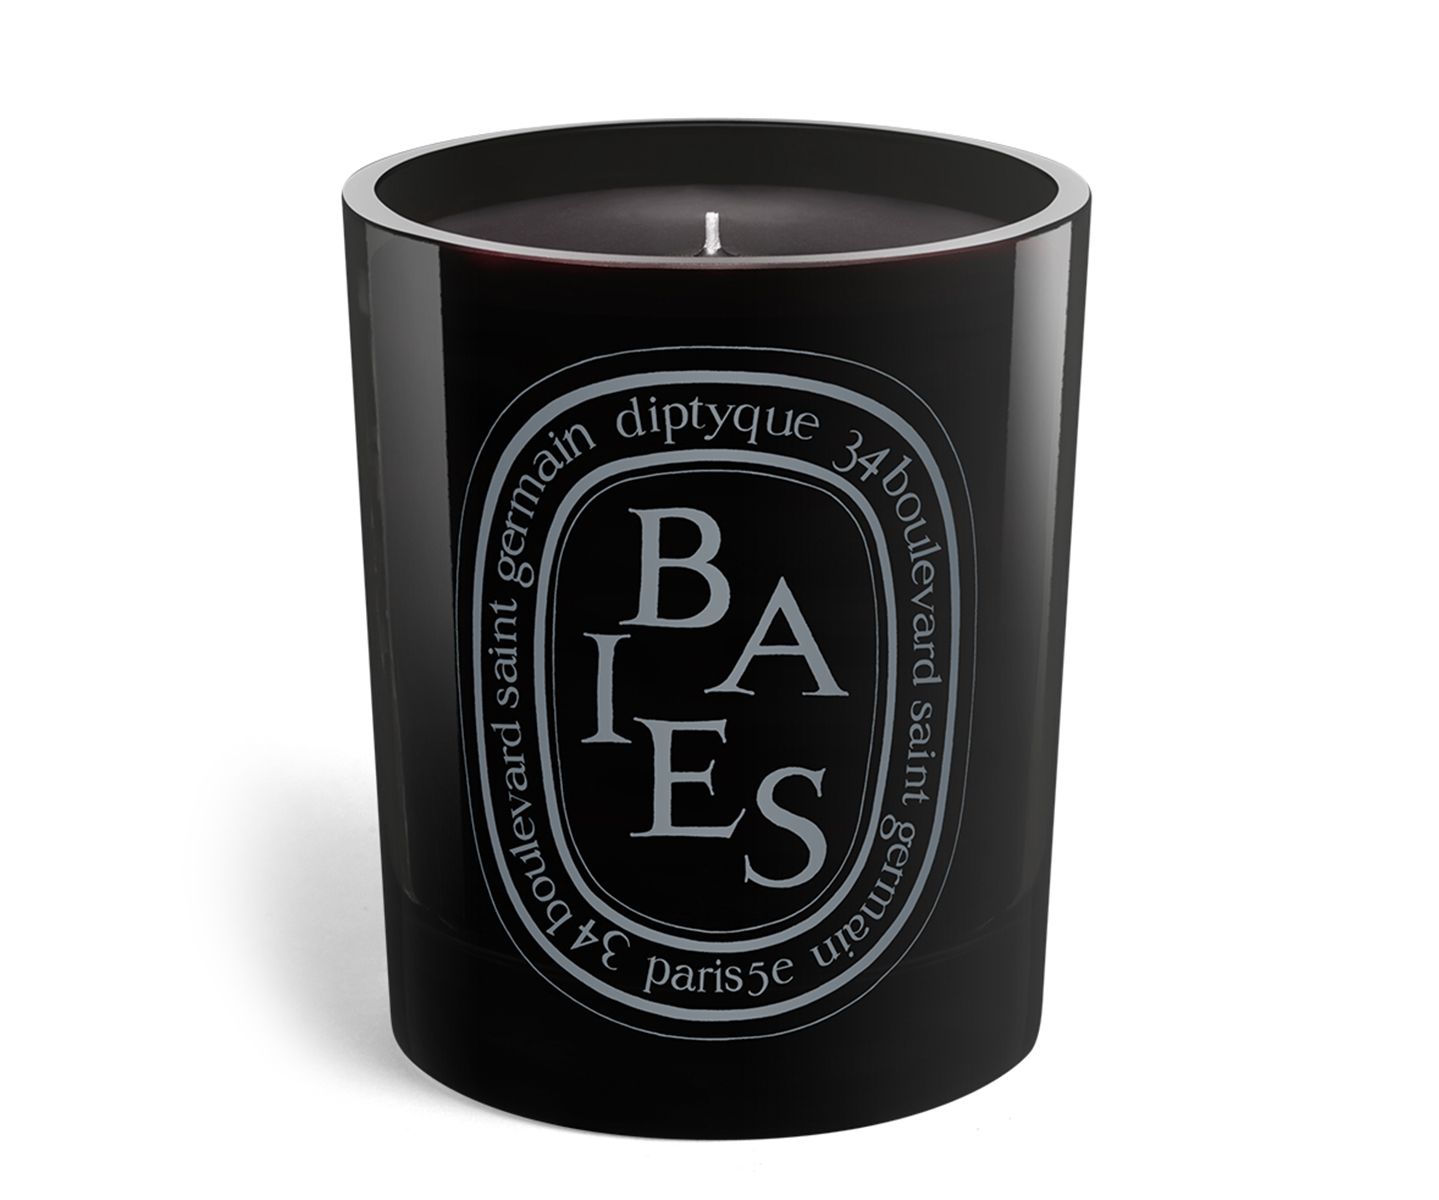 Baies / Berries candle | Diptyque (UK)